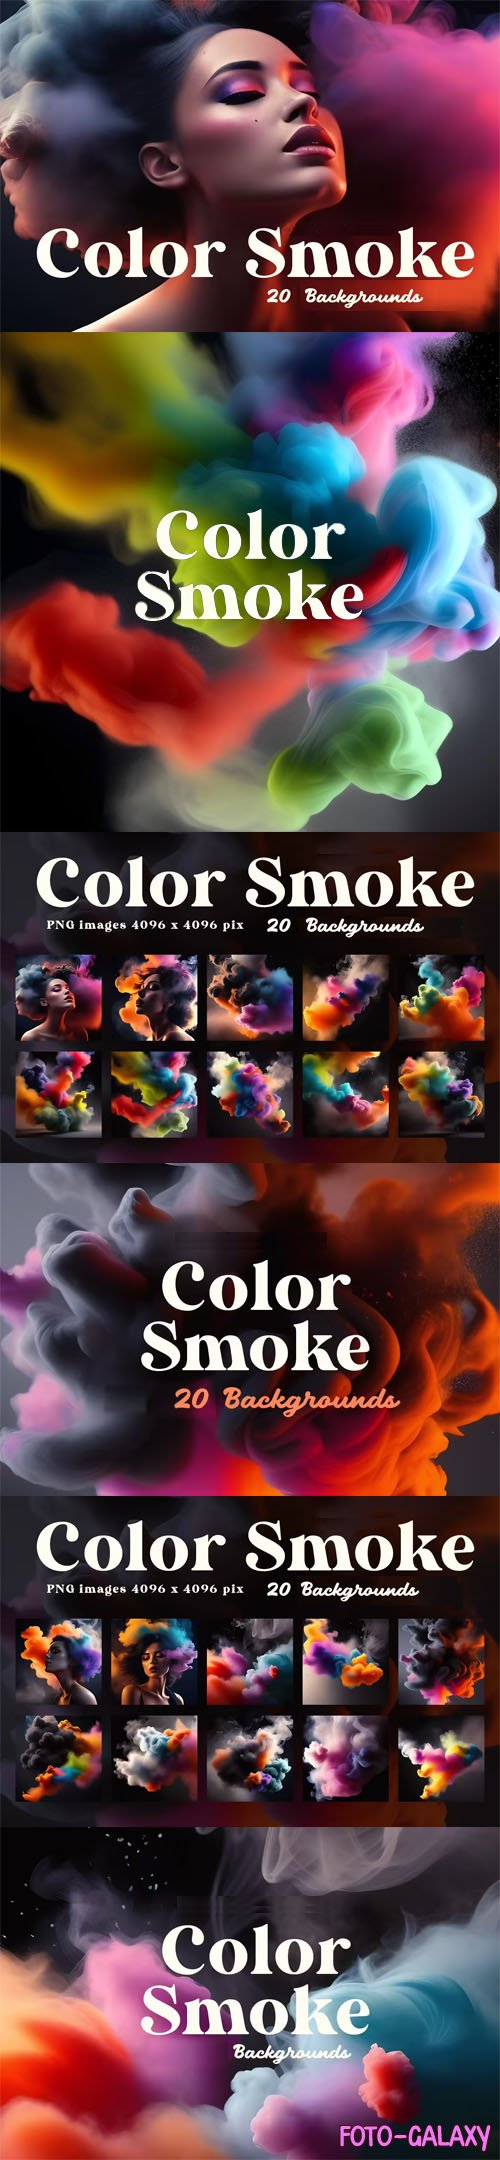 20 Colorful Smoke Backgrounds